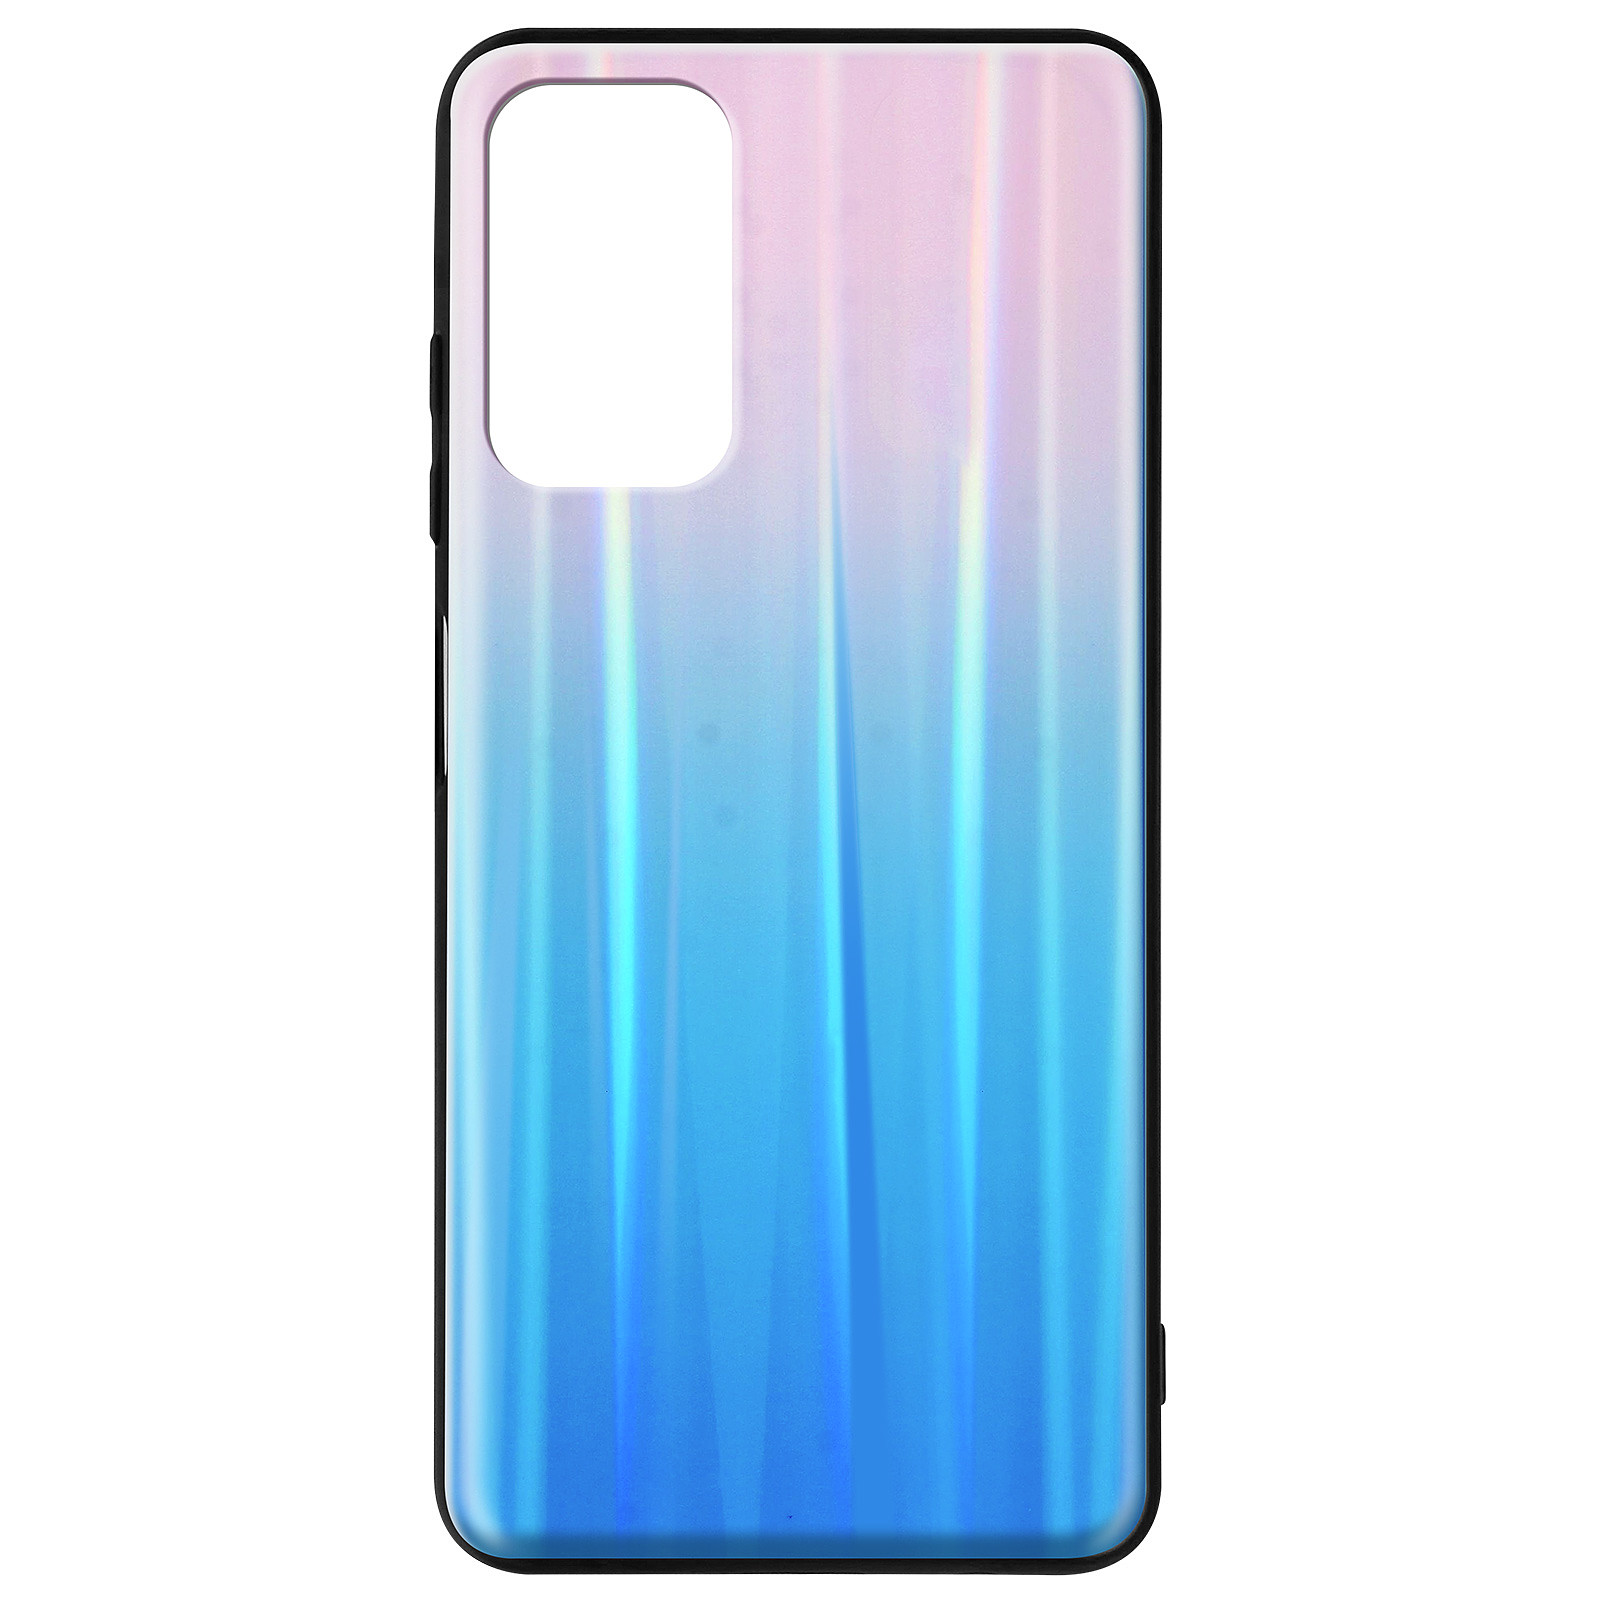 Avizar Coque pour Xiaomi Redmi 9T et Poco M3 Bi-matière Holographique Brillant Fine Legère Rose et Bleu - Coque telephone Avizar